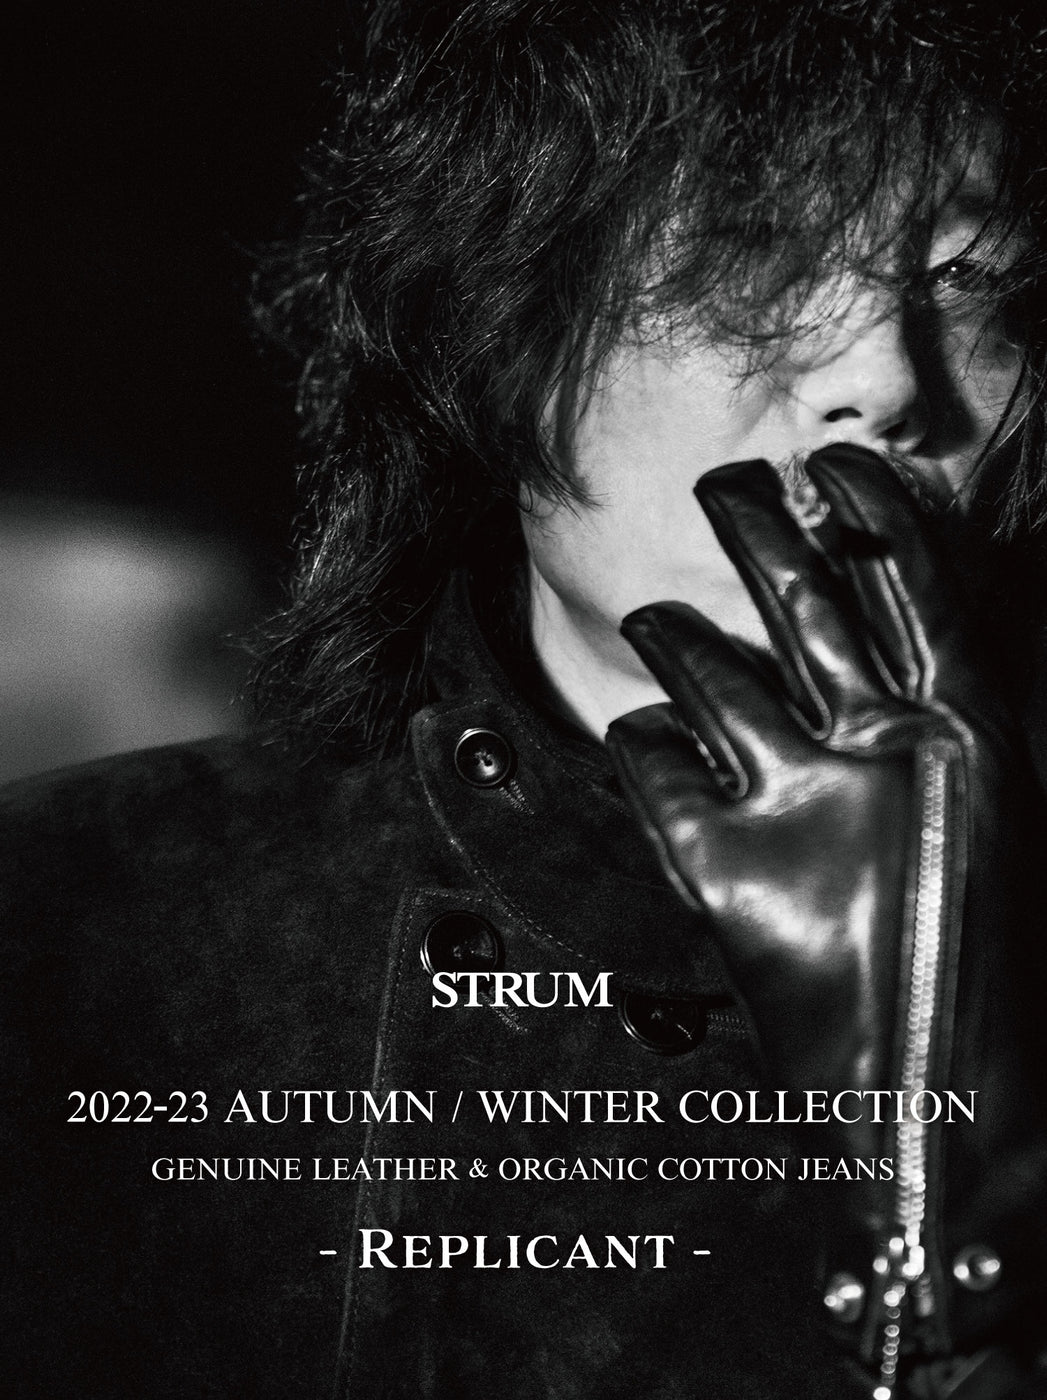 『STRUM』 2022-23 AUTUMN / WINTER COLLECTION - Replicant - イメージPhoto 第三弾公開！